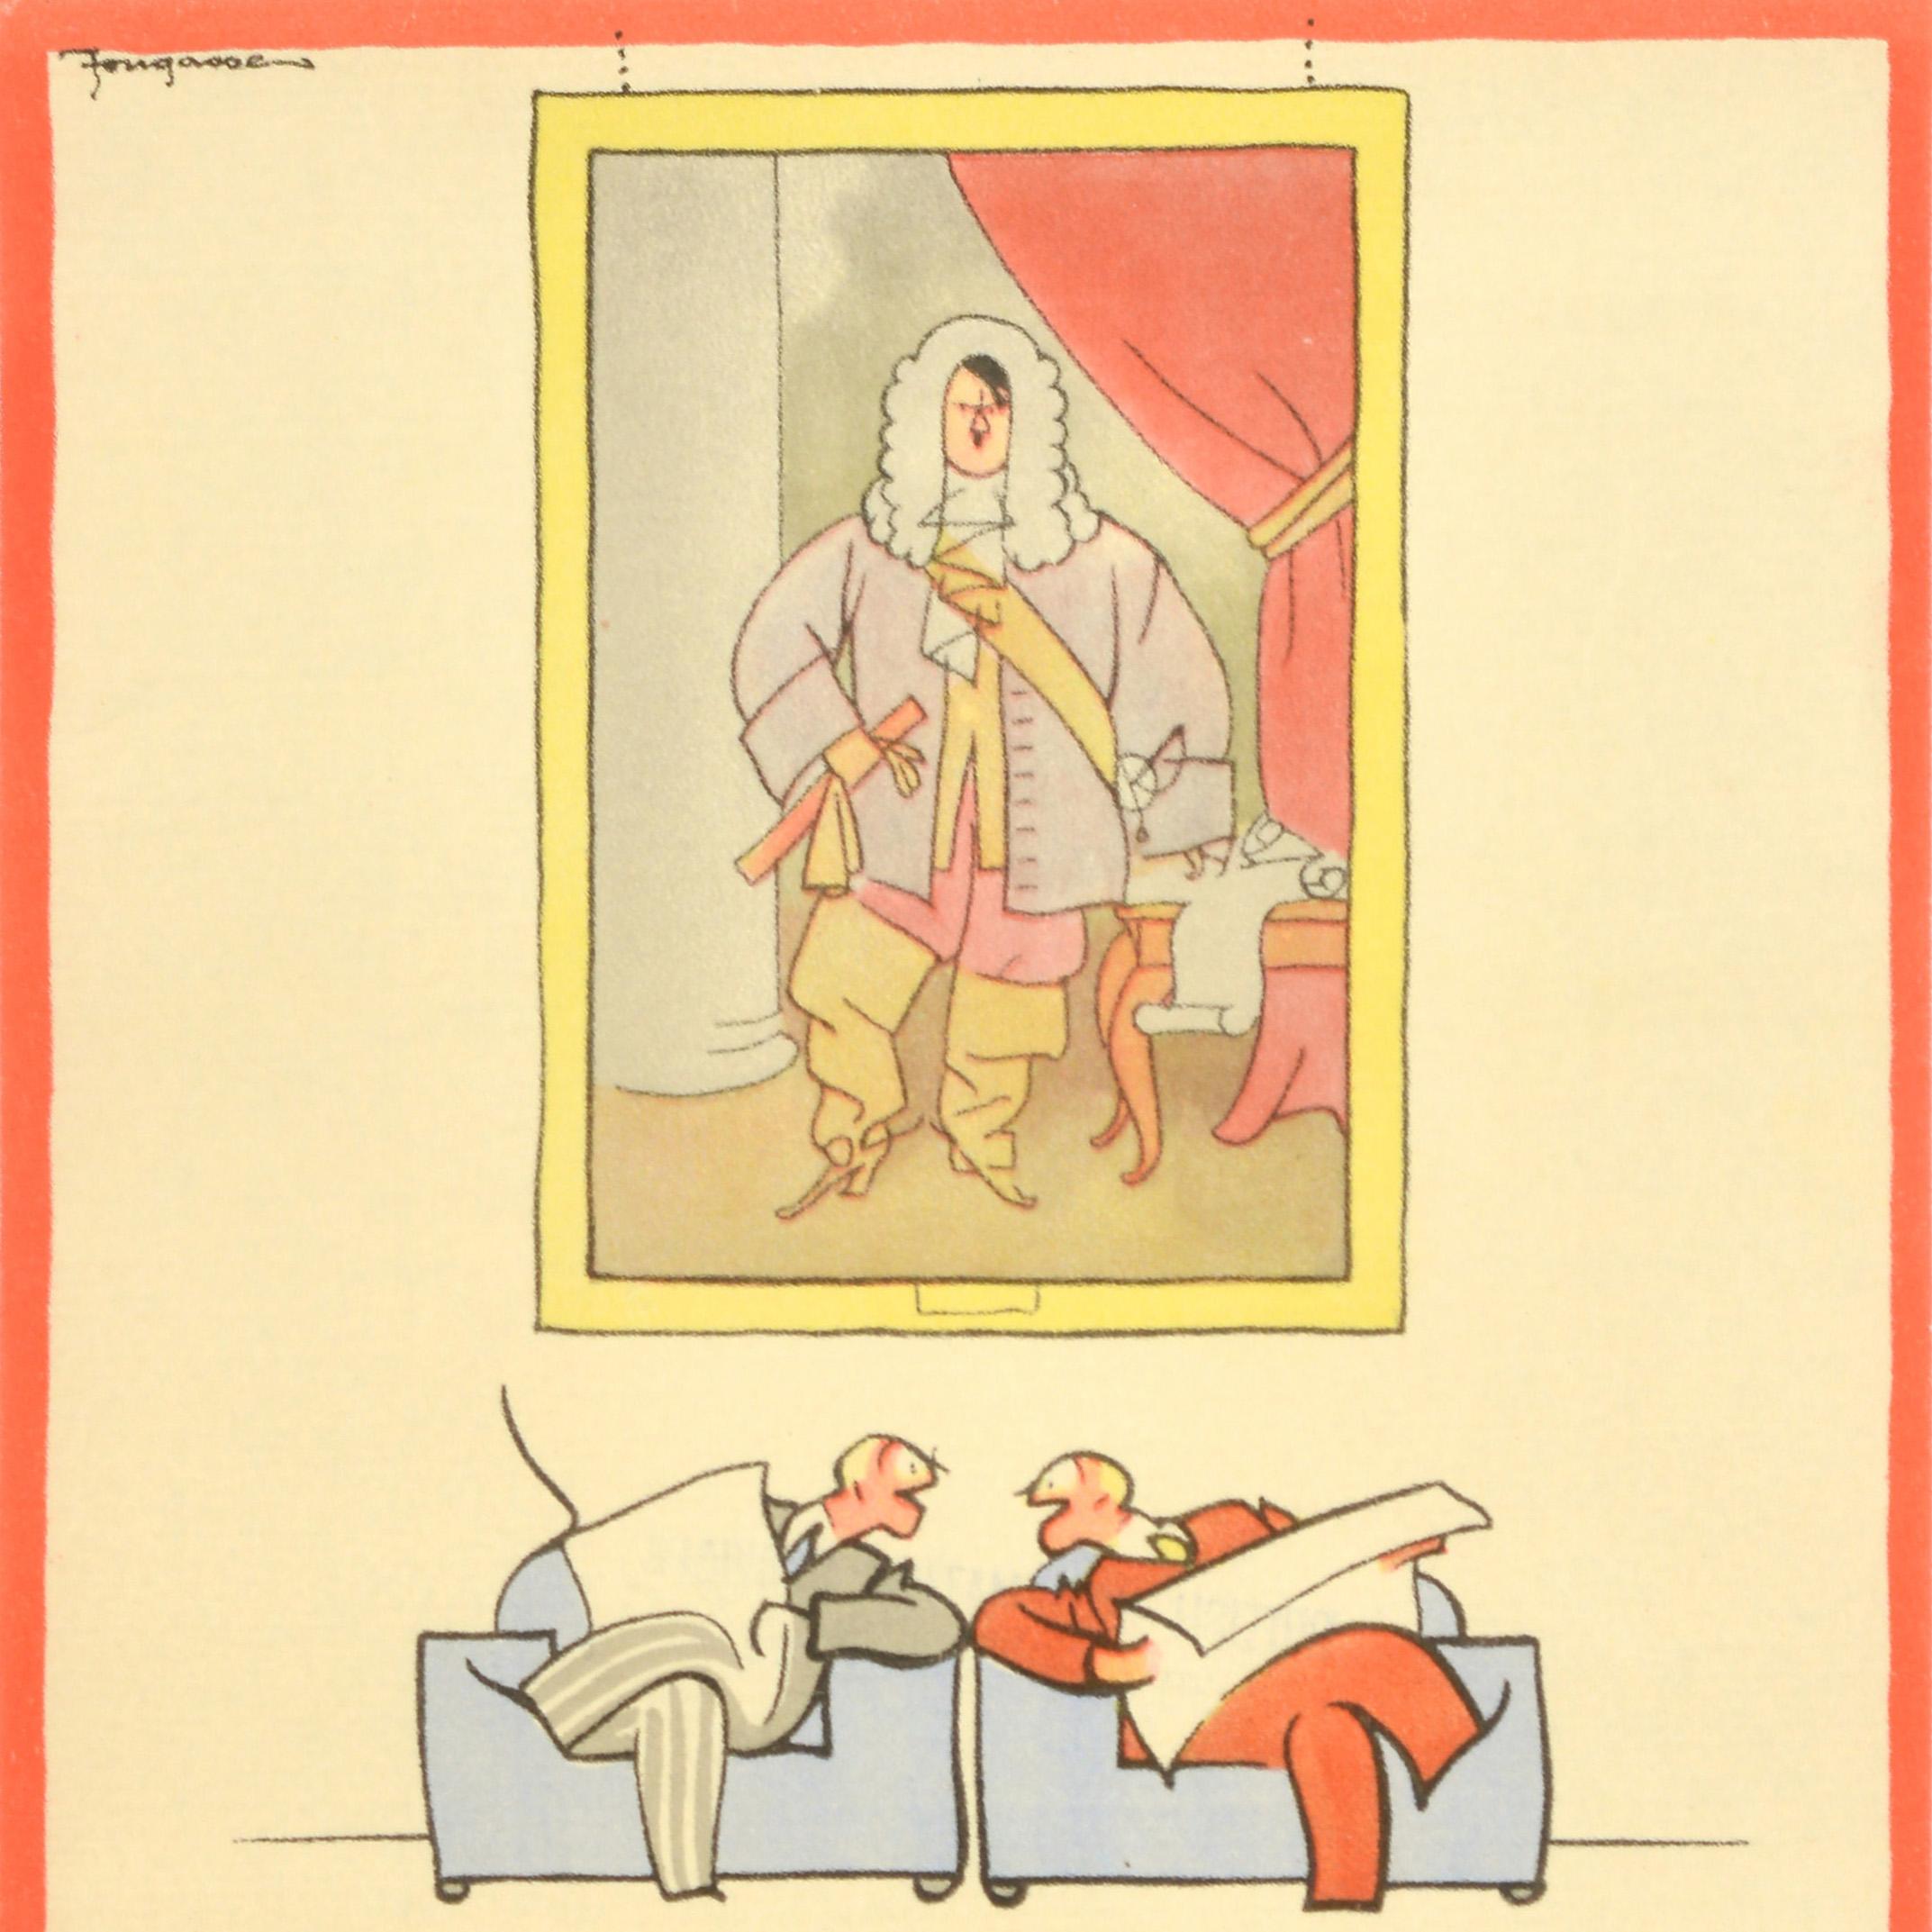 Original Vintage War Poster Careless Talk Costs Lives Four Walls WWII Fougasse - Orange Print by Fougasse (Cyril Kenneth Bird)